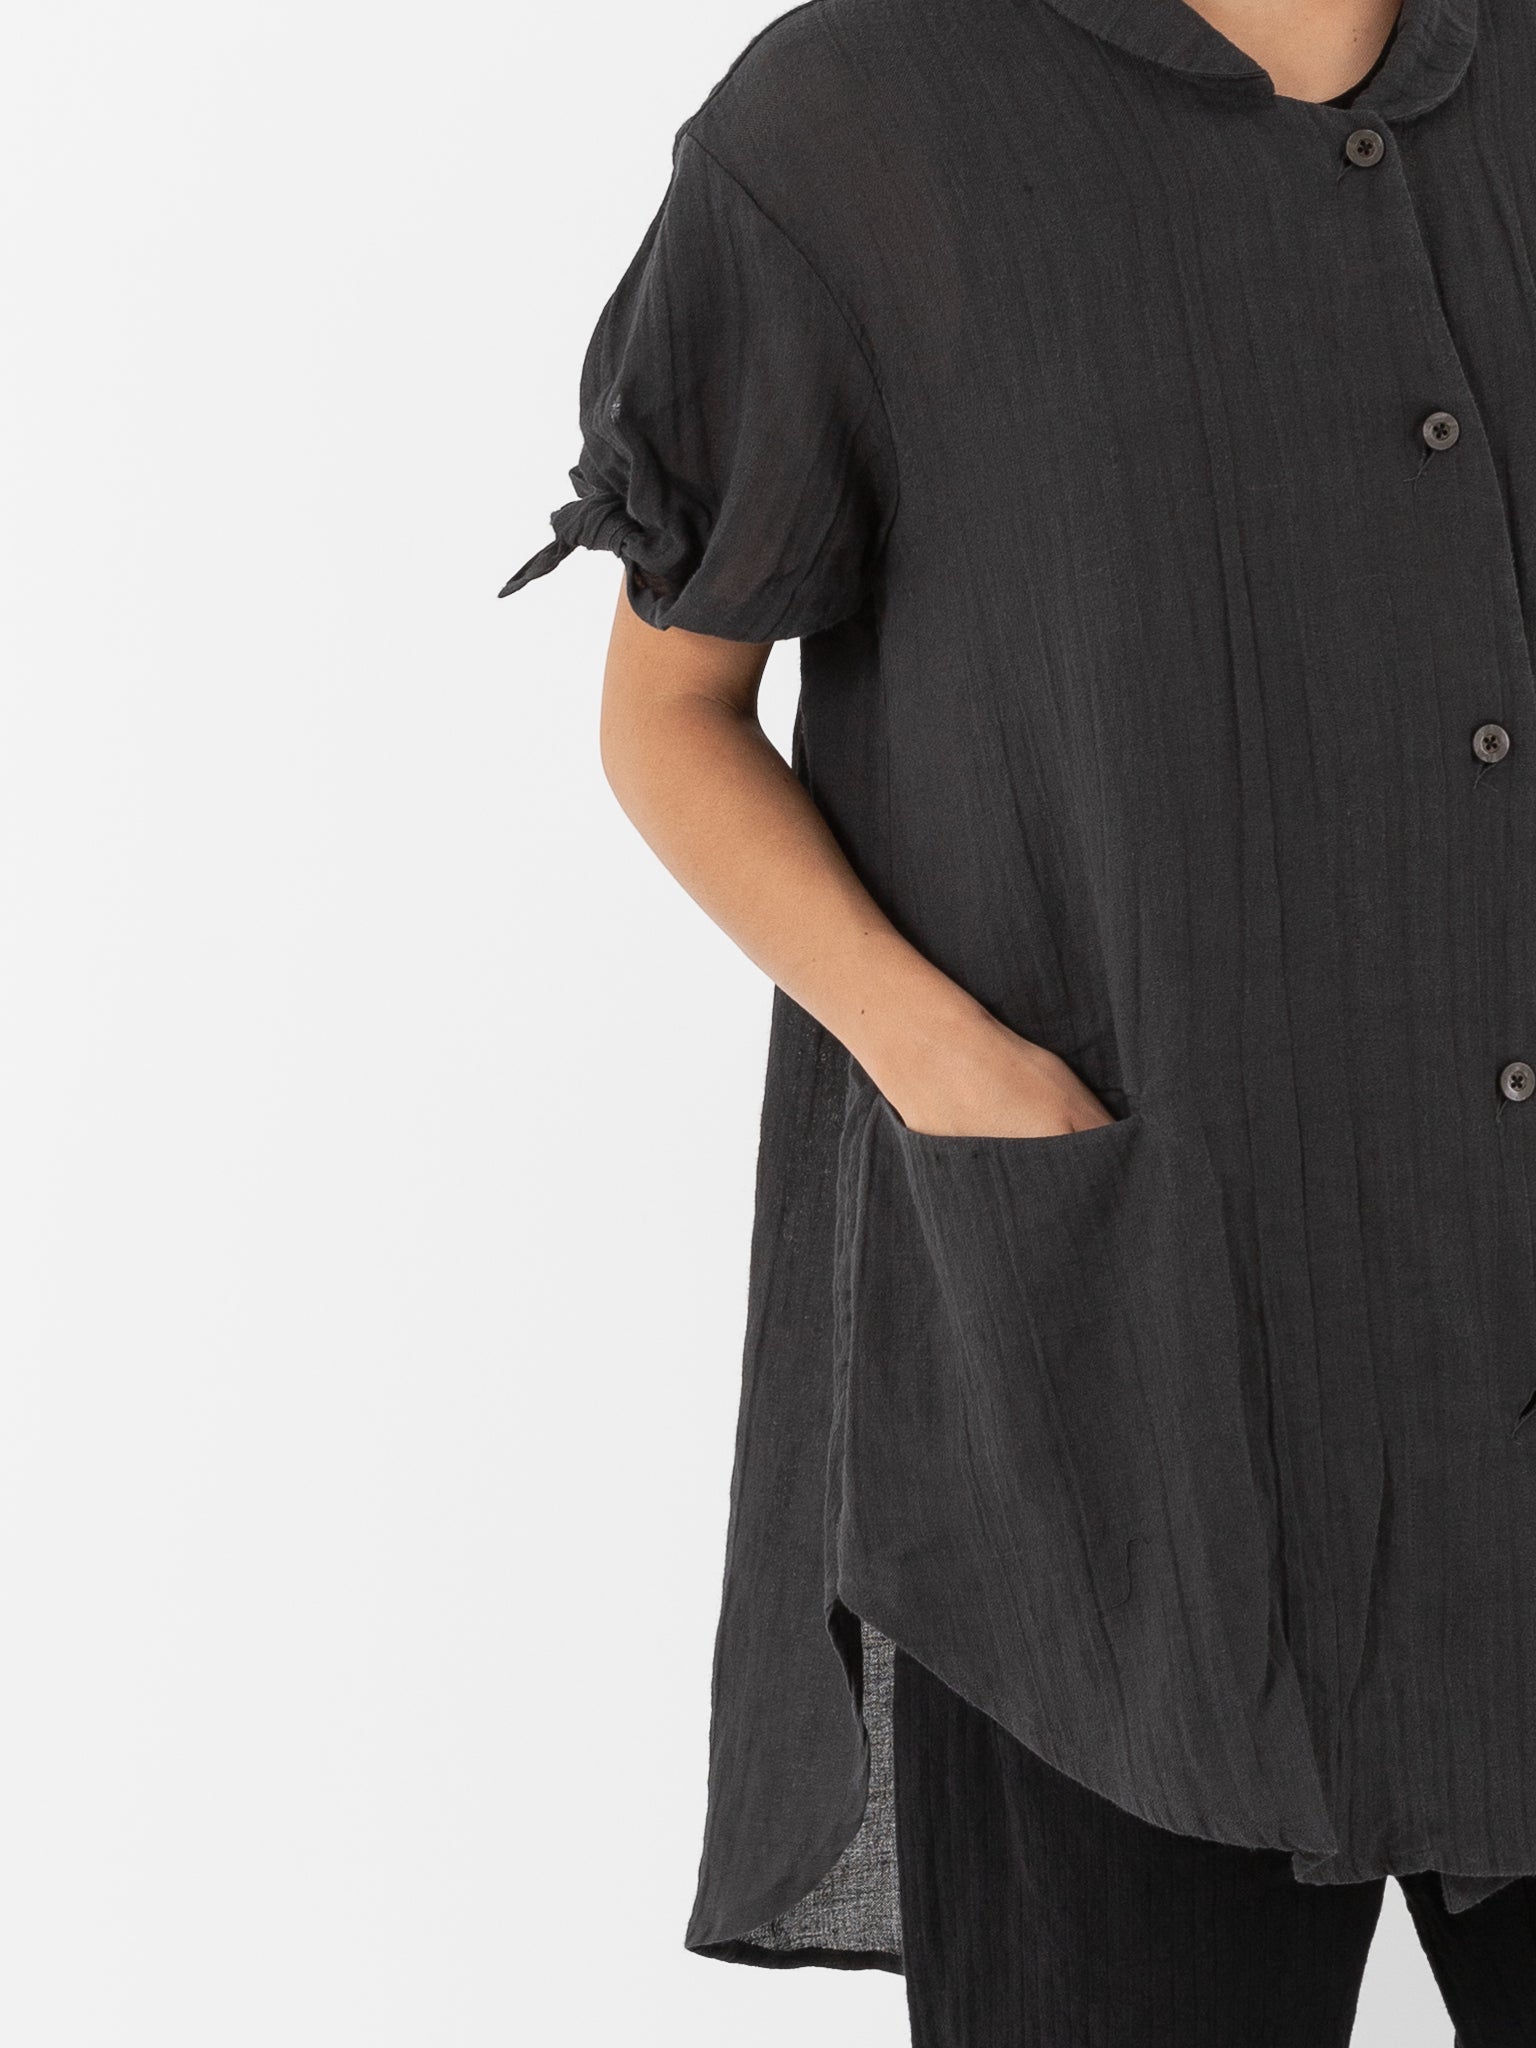 Atelier Suppan A-Line Shirt, Dark - Worthwhile